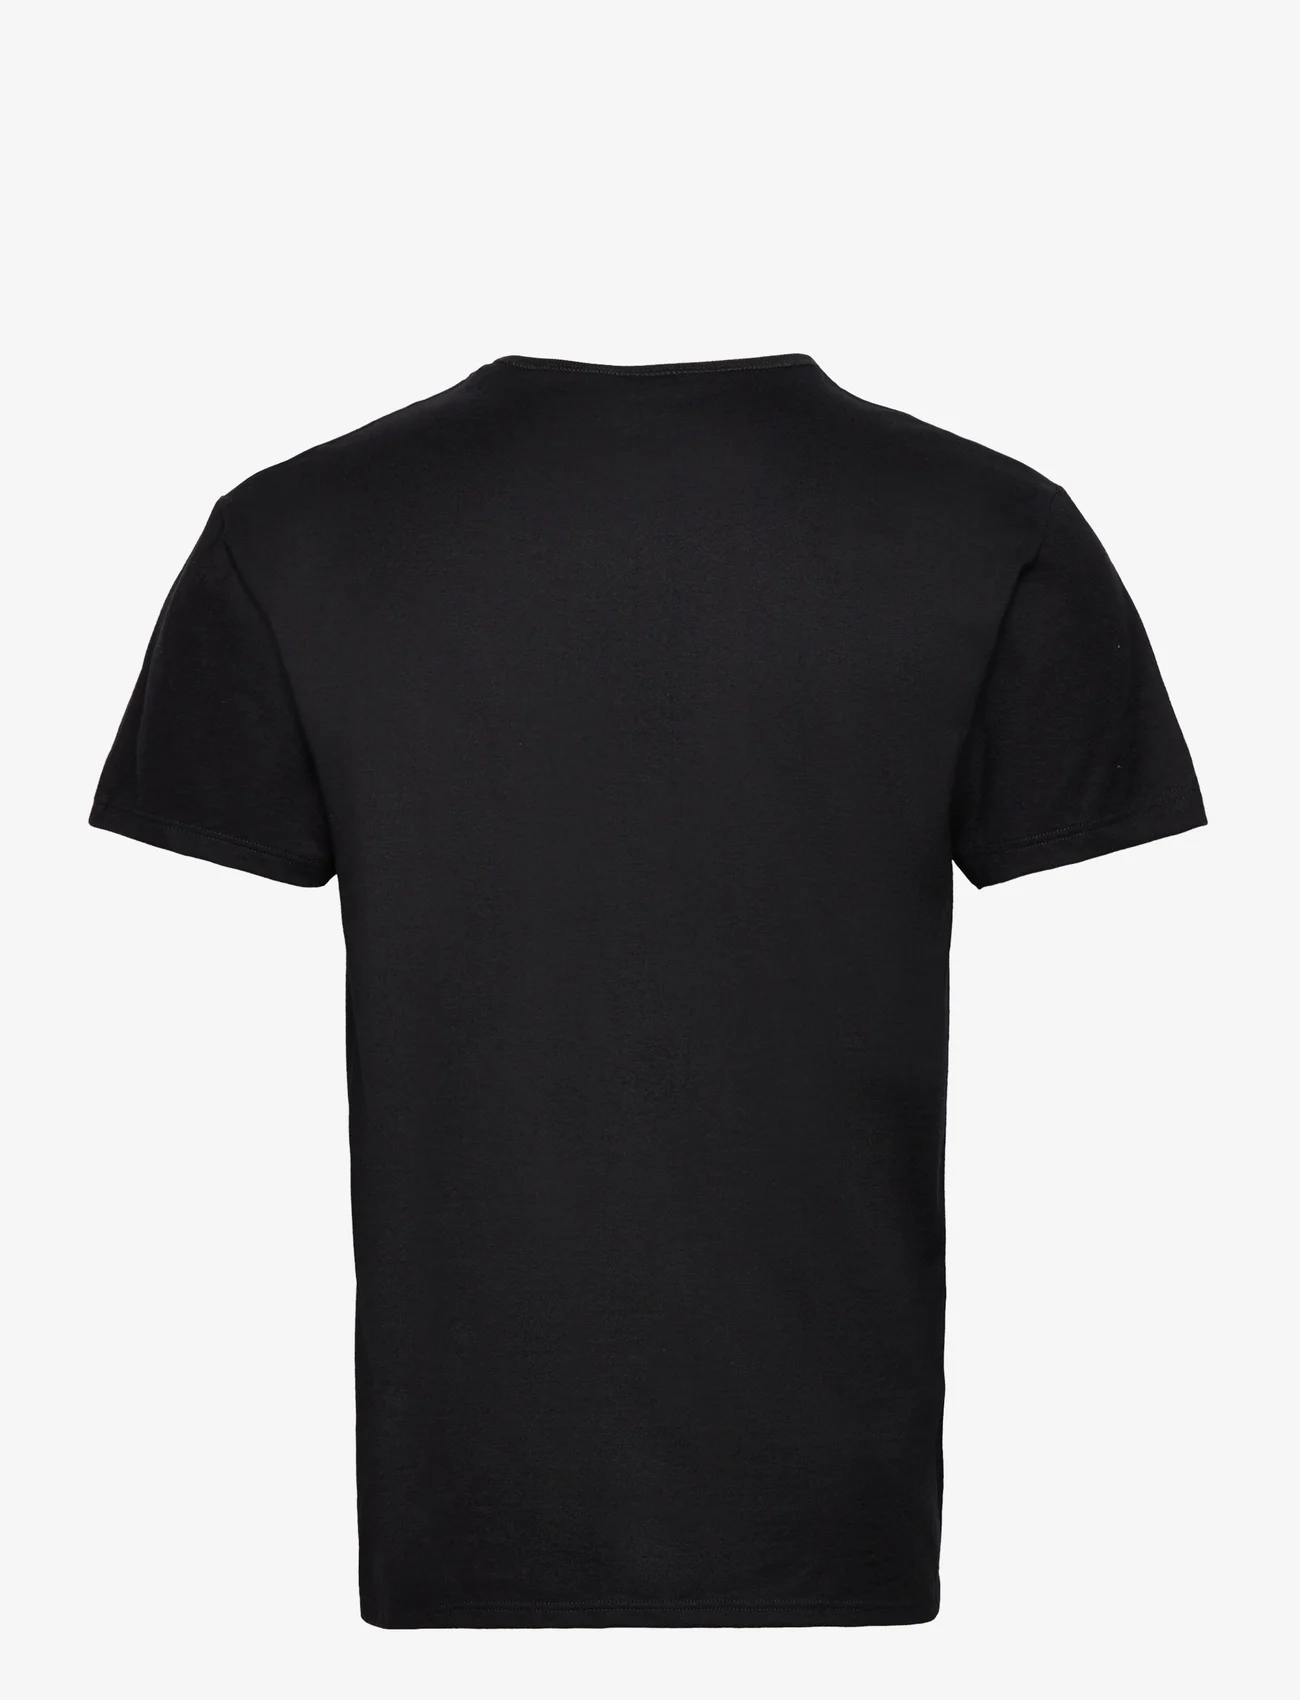 Dovre - Dovre T-shirts 1/4 ærme organi - laveste priser - black - 1